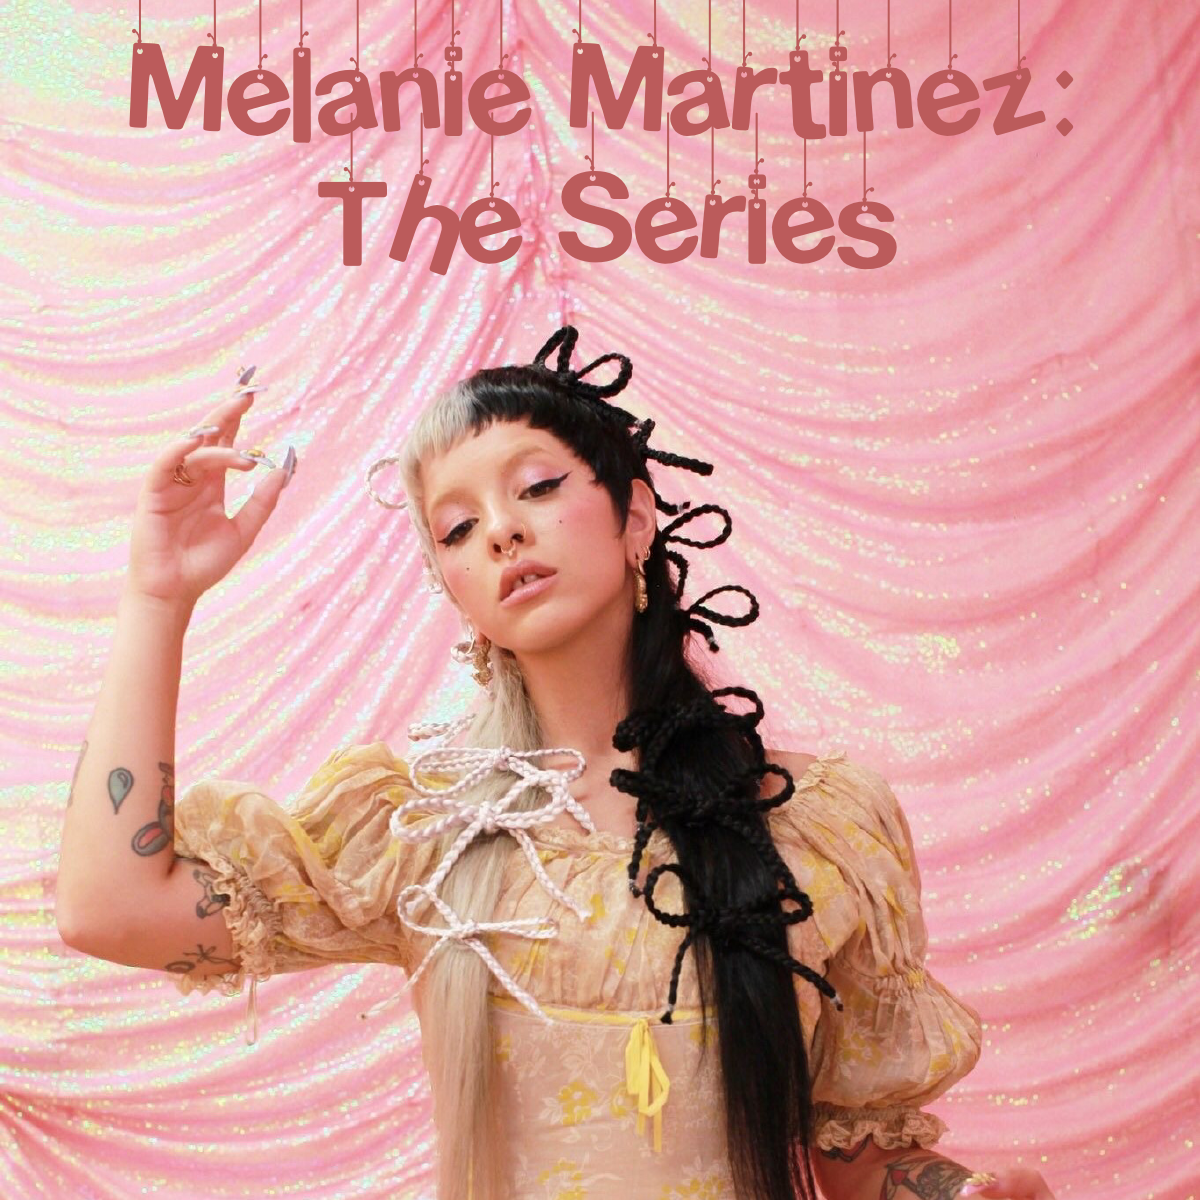 Melanie Martinez - Wikipedia, la enciclopedia libre